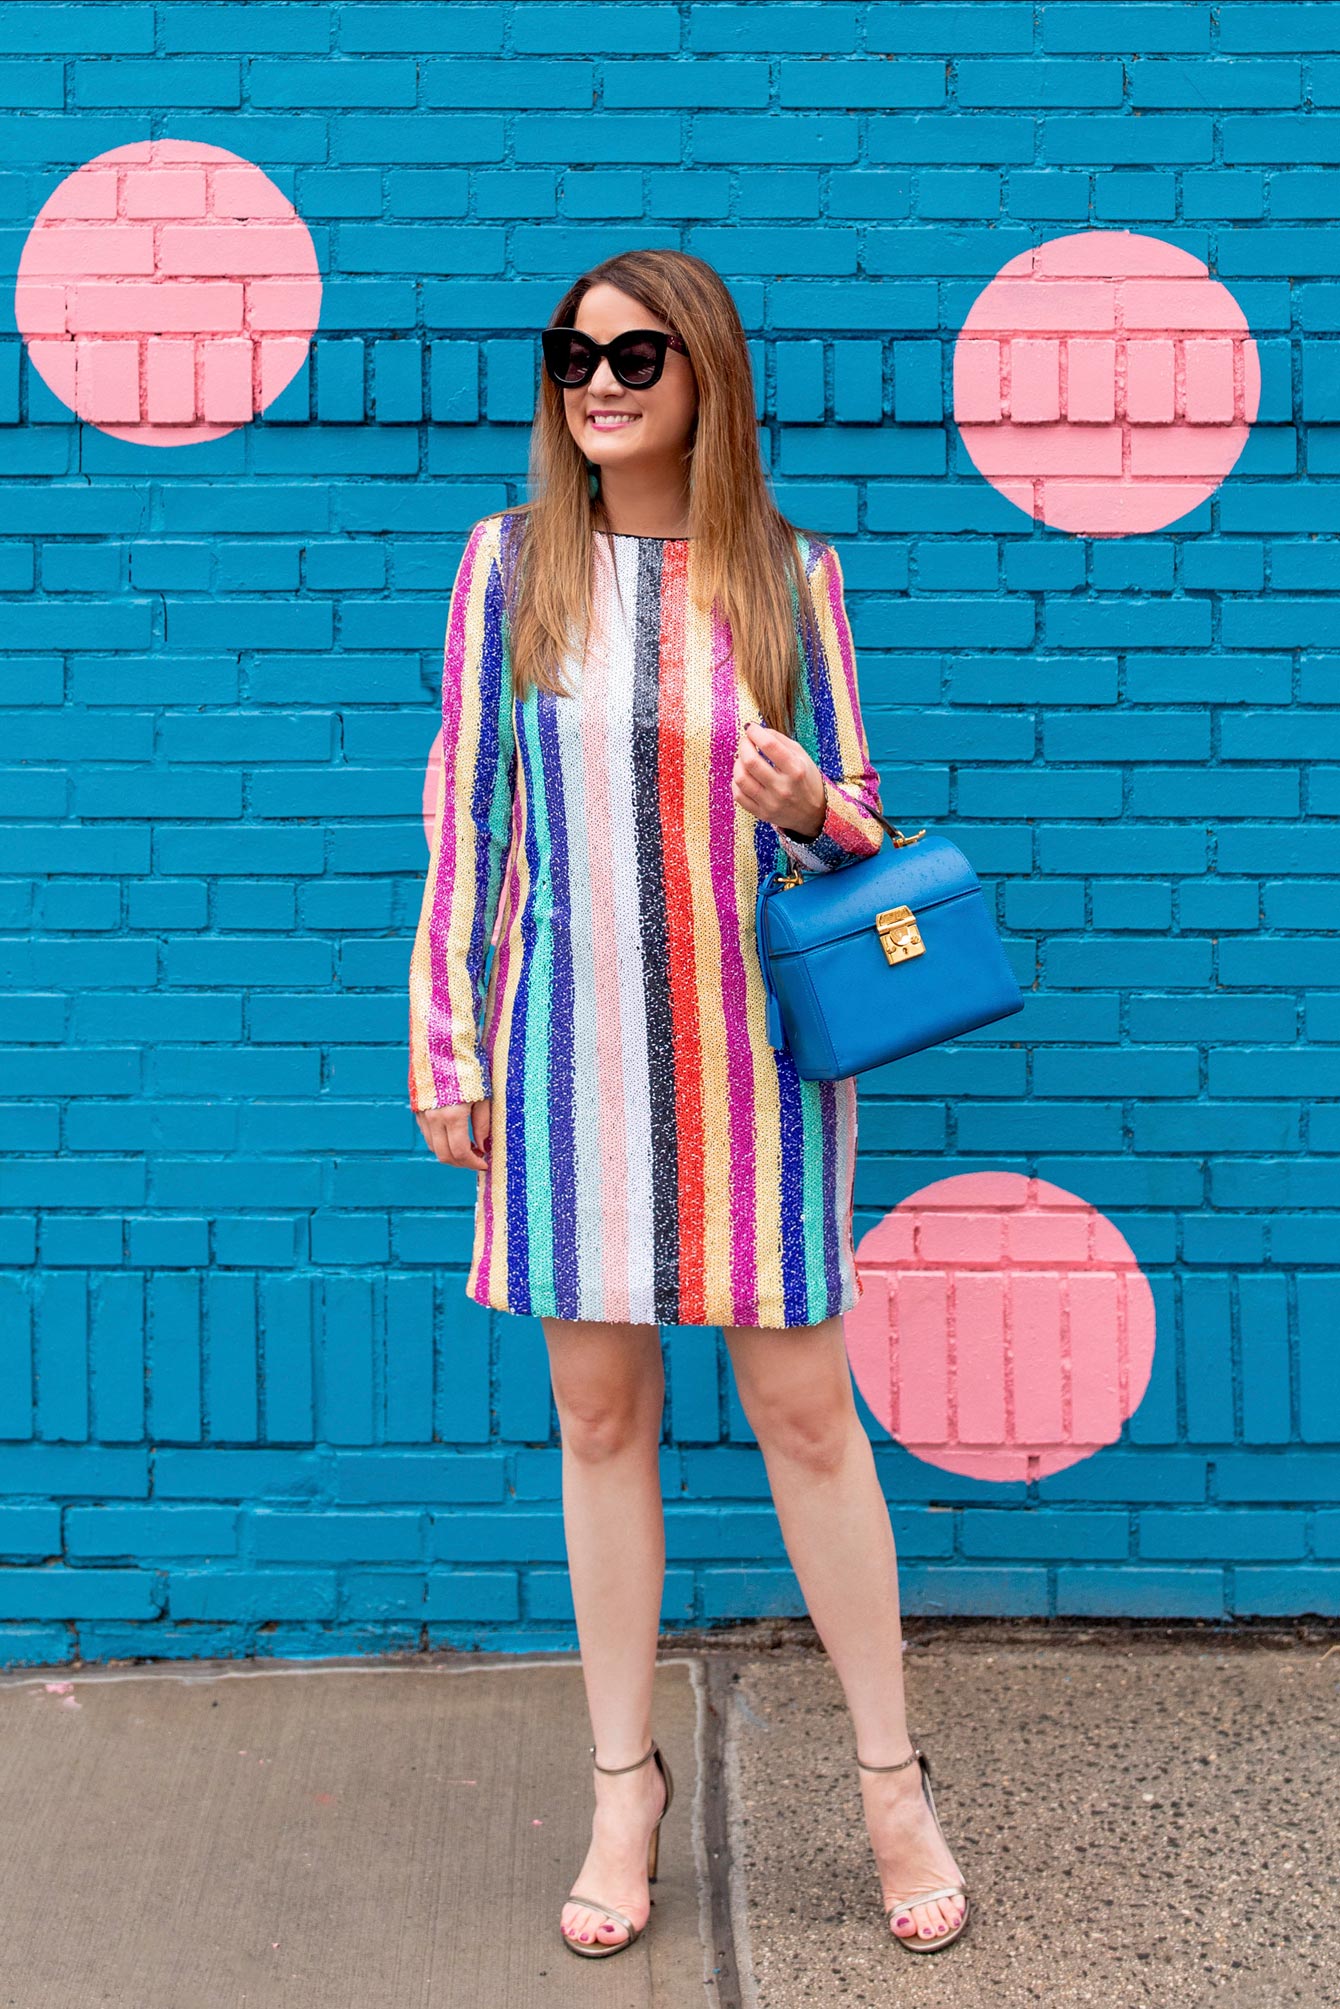 Teal Rainbow Sequin Stripe Dress Short Sleeve